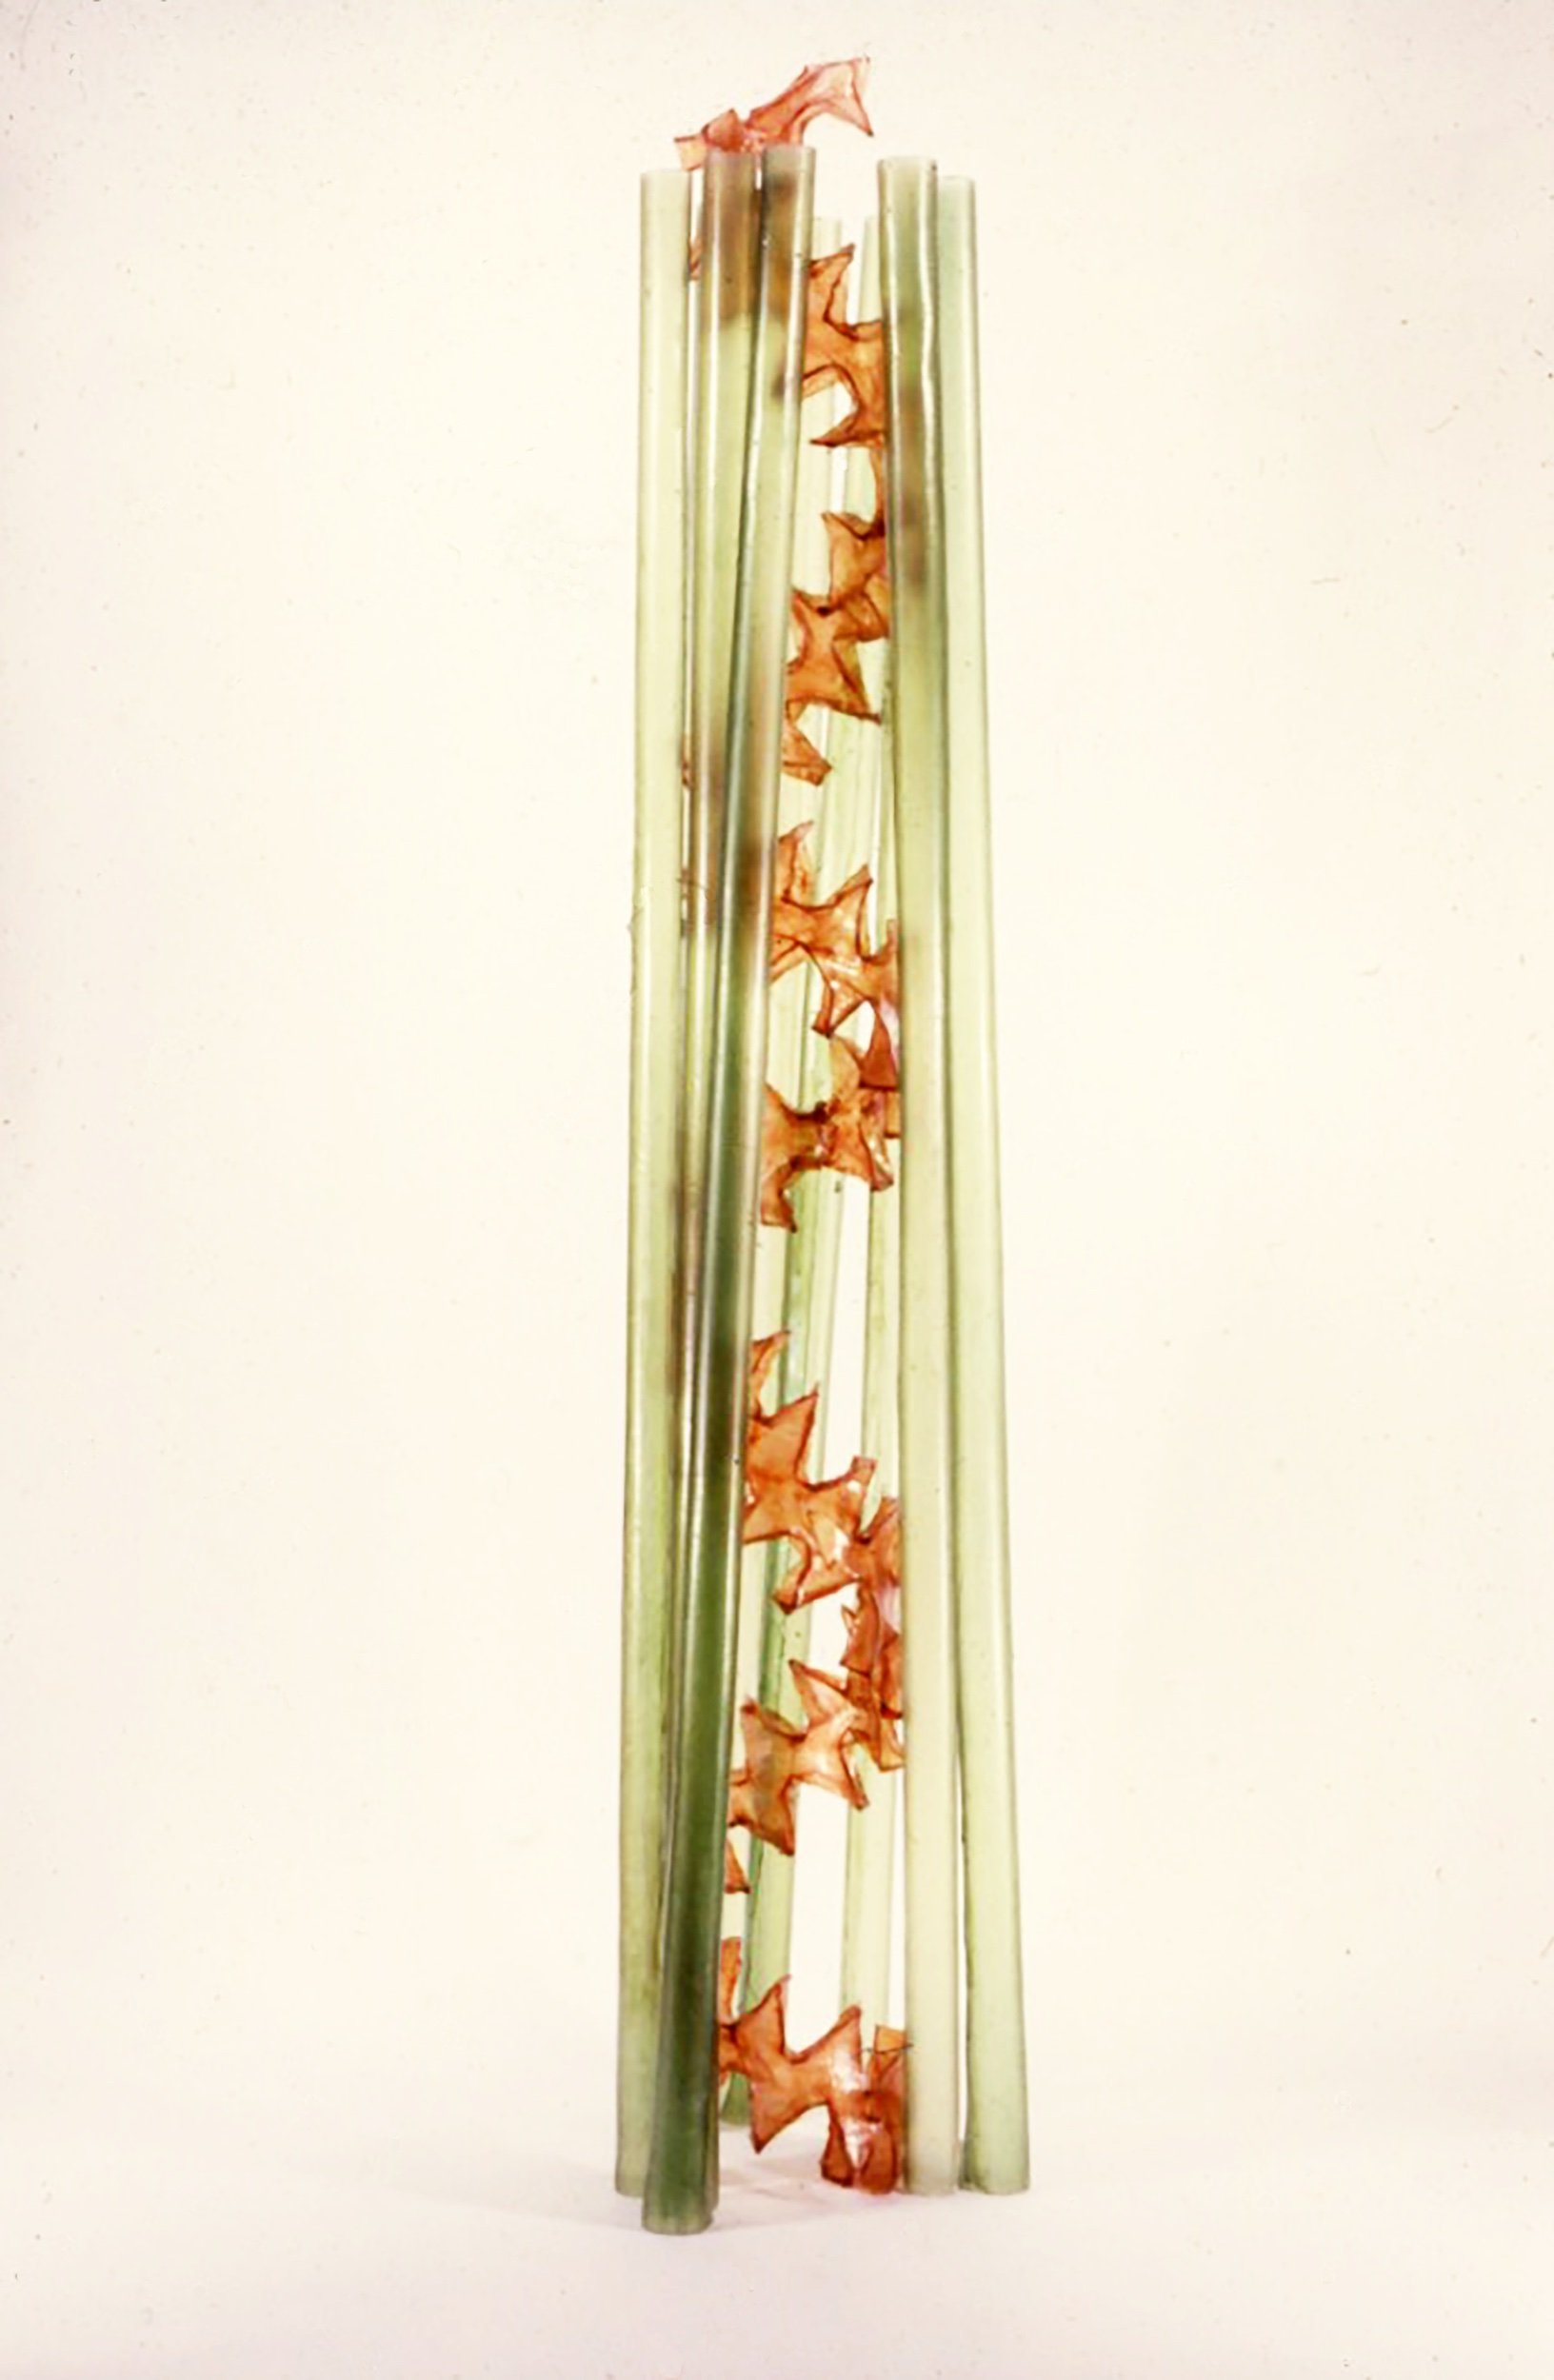  C.B., 1983, fiberglass and resin, 6’ tall 